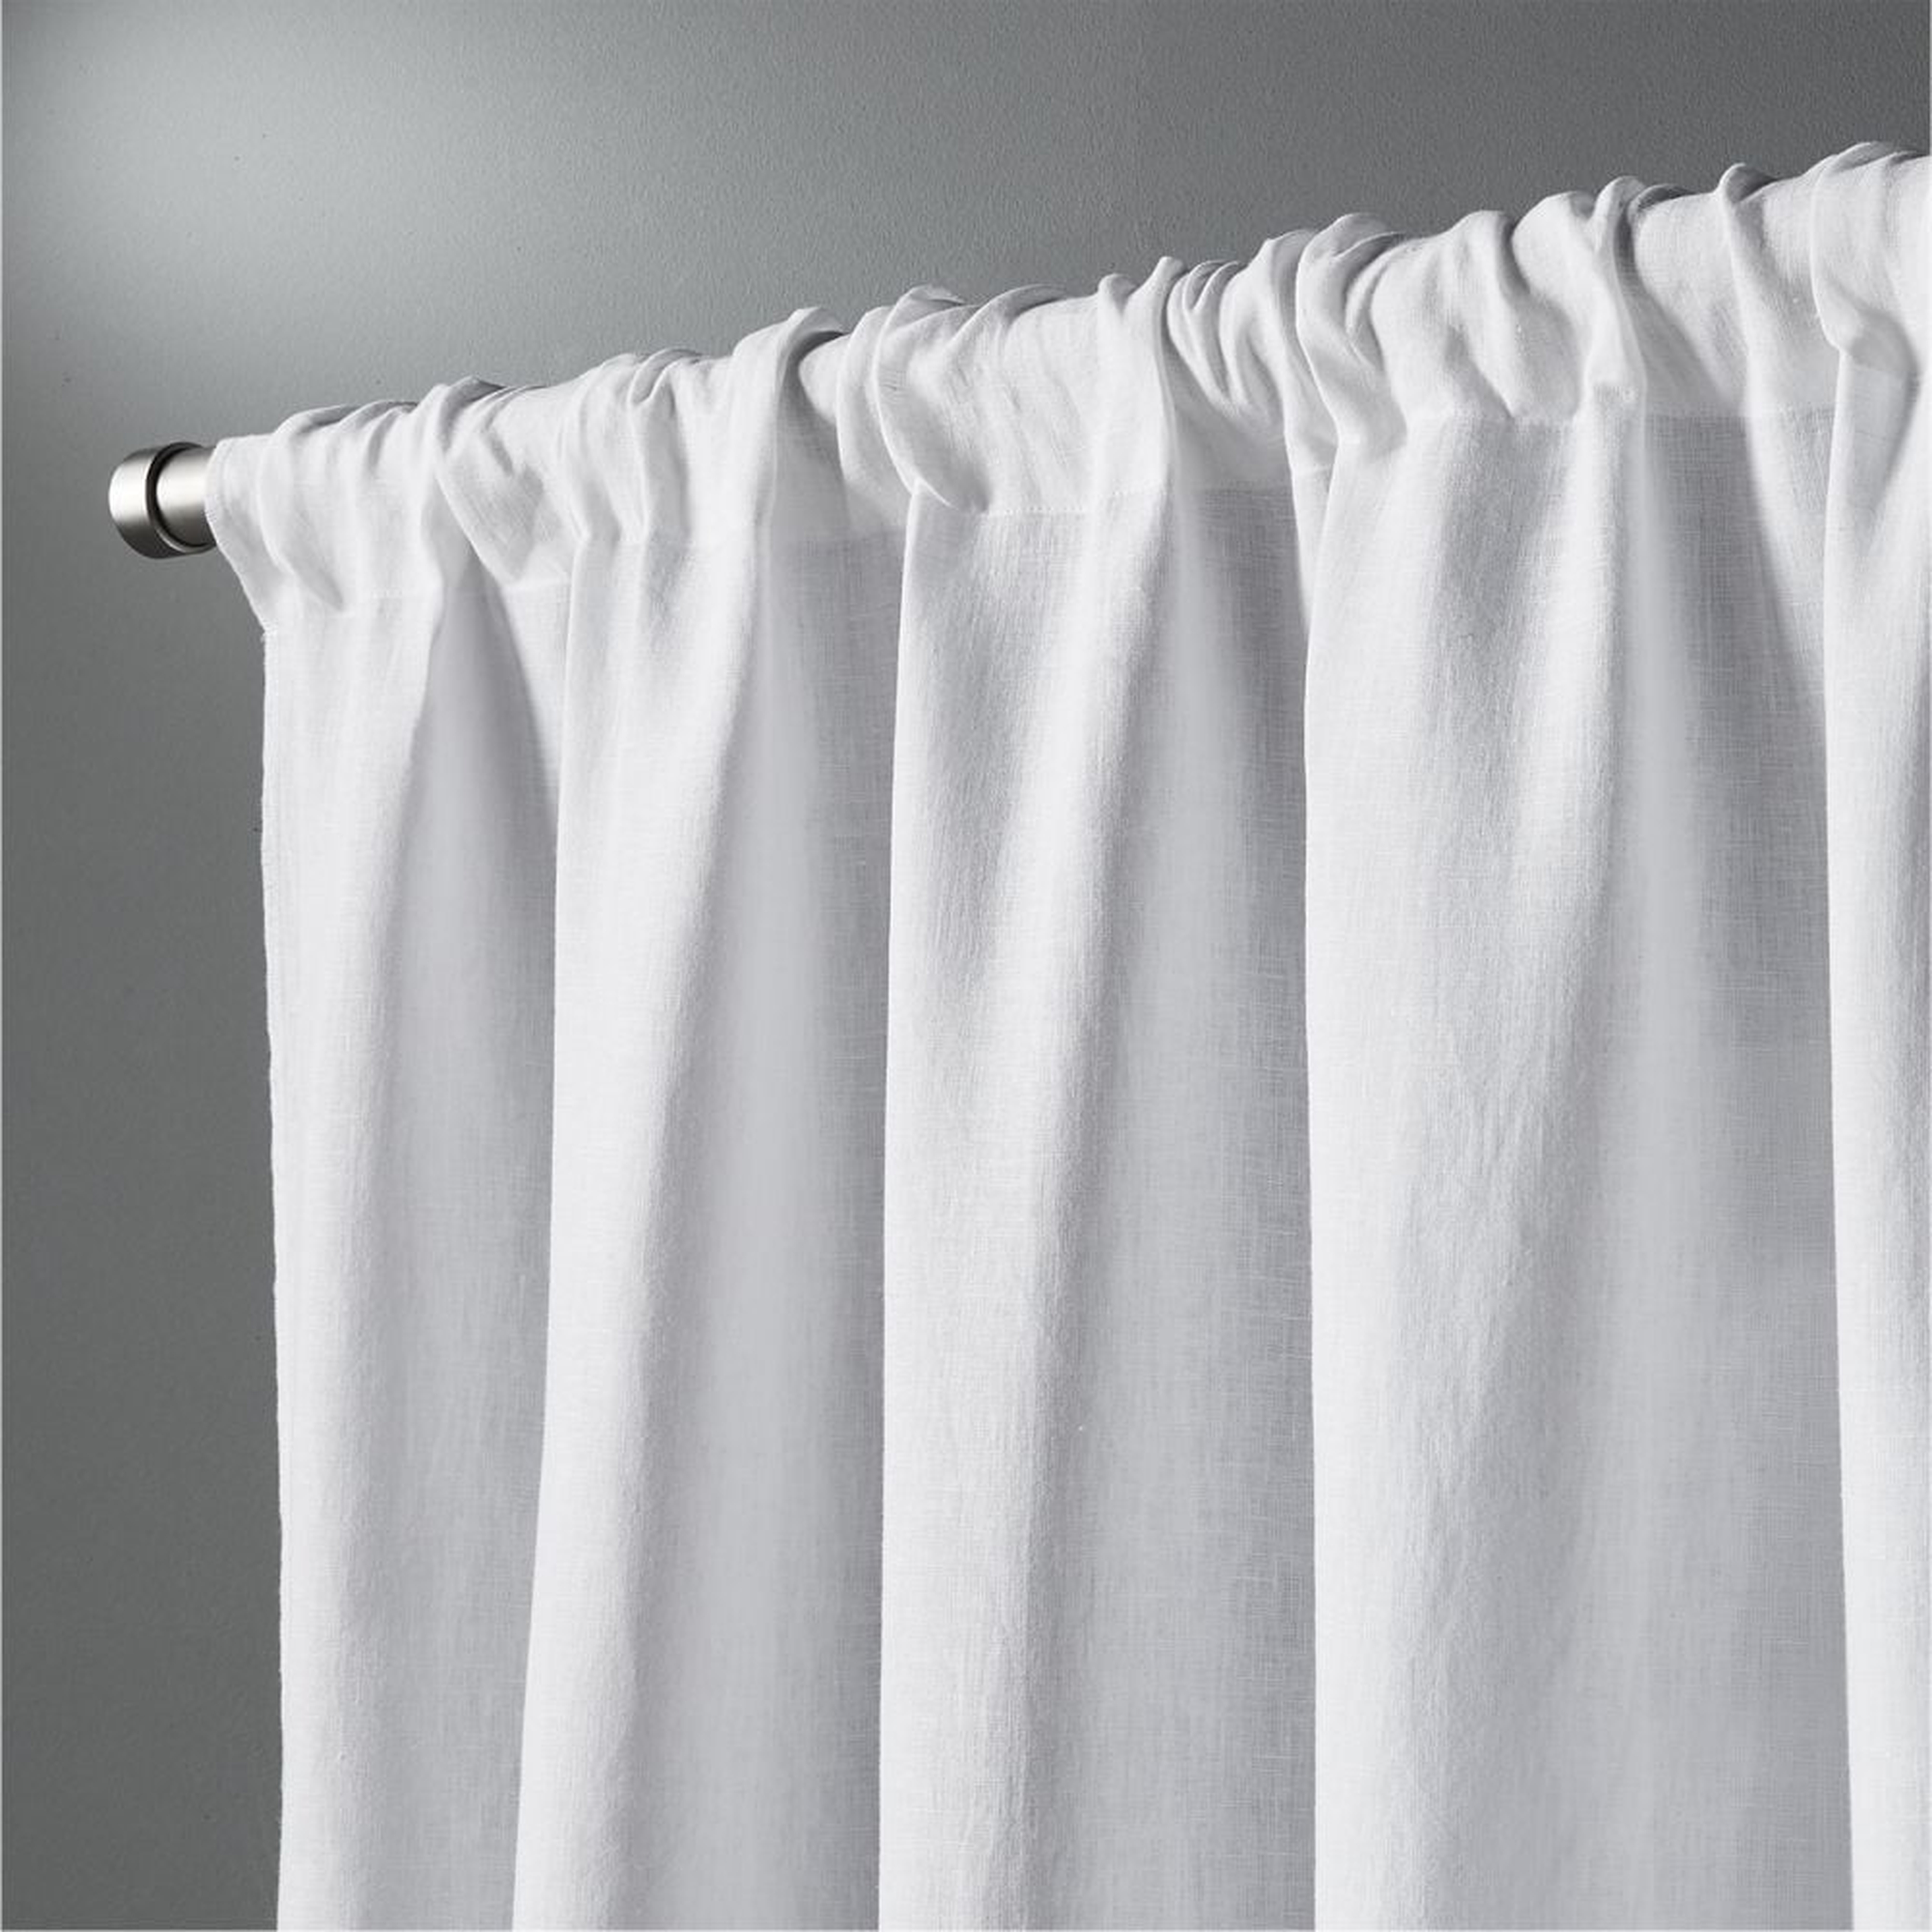 "white linen curtain panel 48""x96""" - CB2